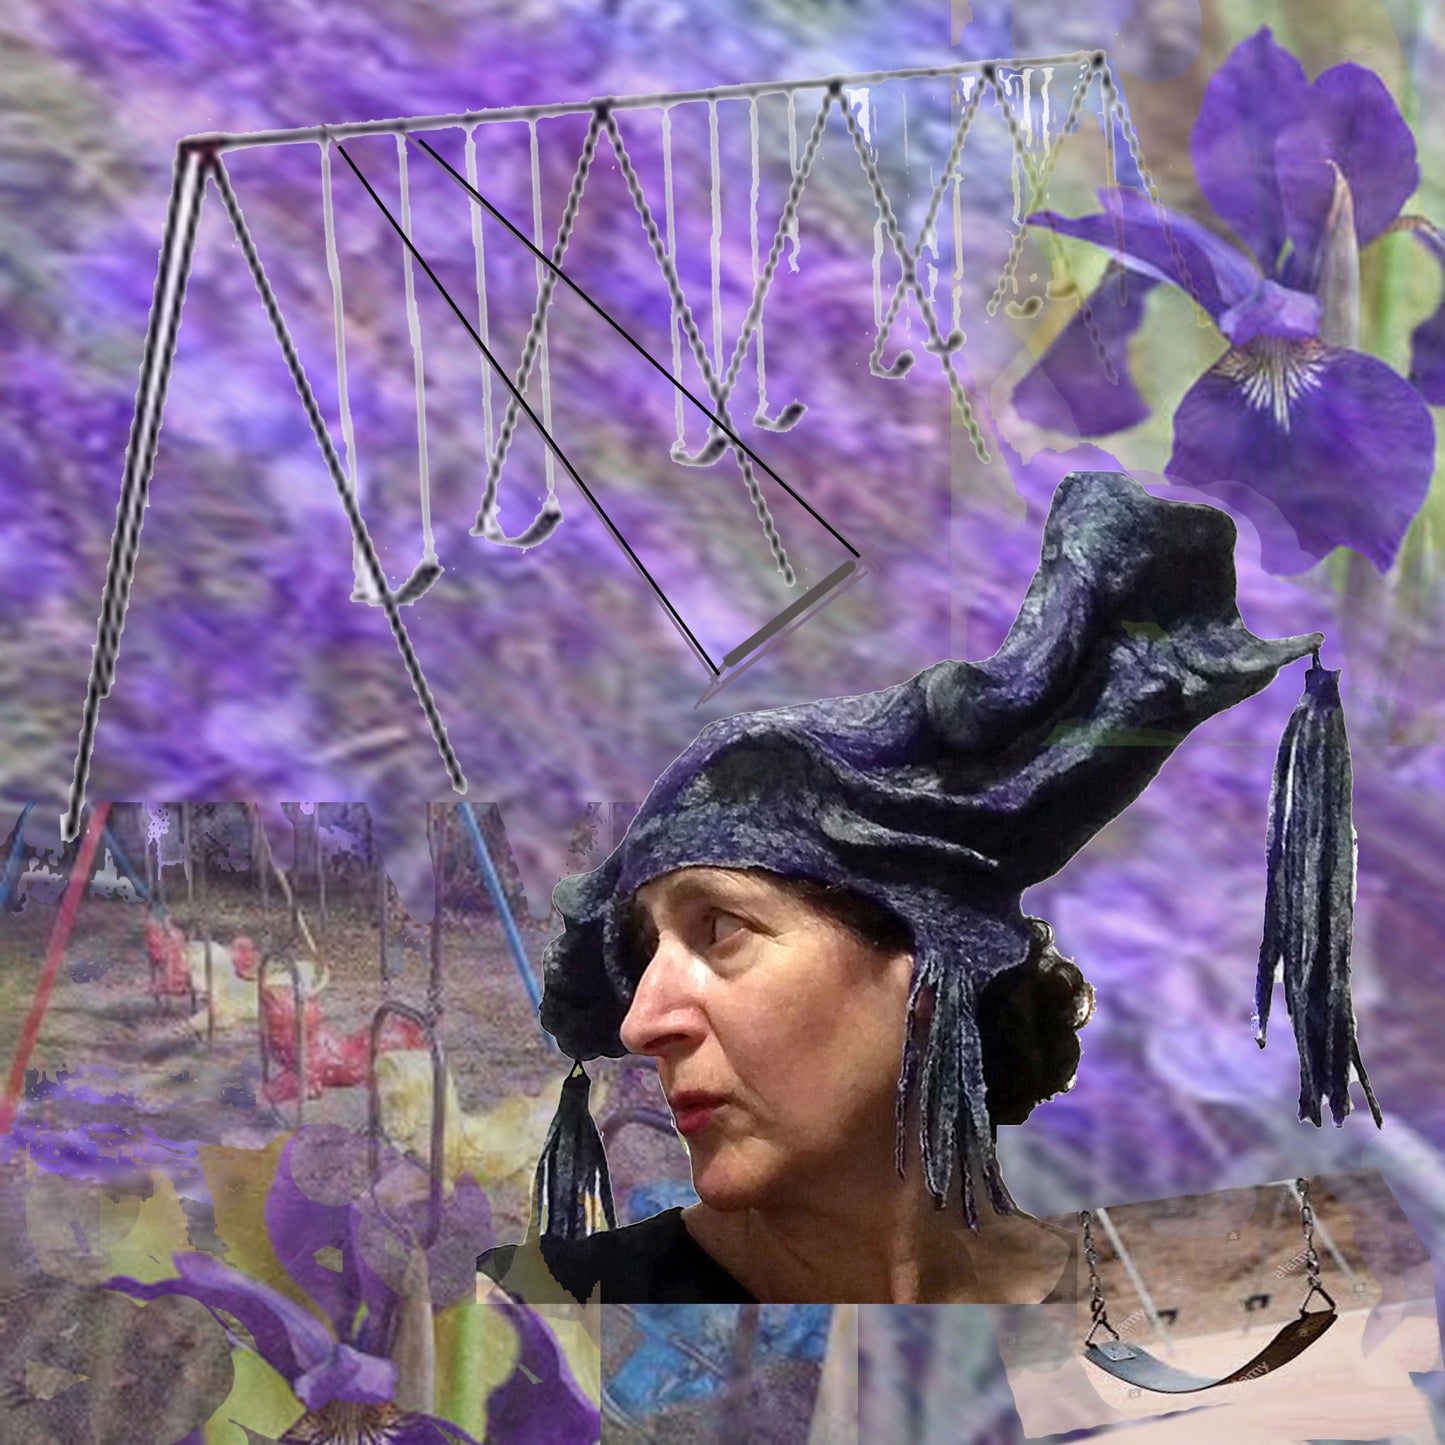 Fantasy Headwear of a Purple Tasseled Hat set against a digital collage of a playground.